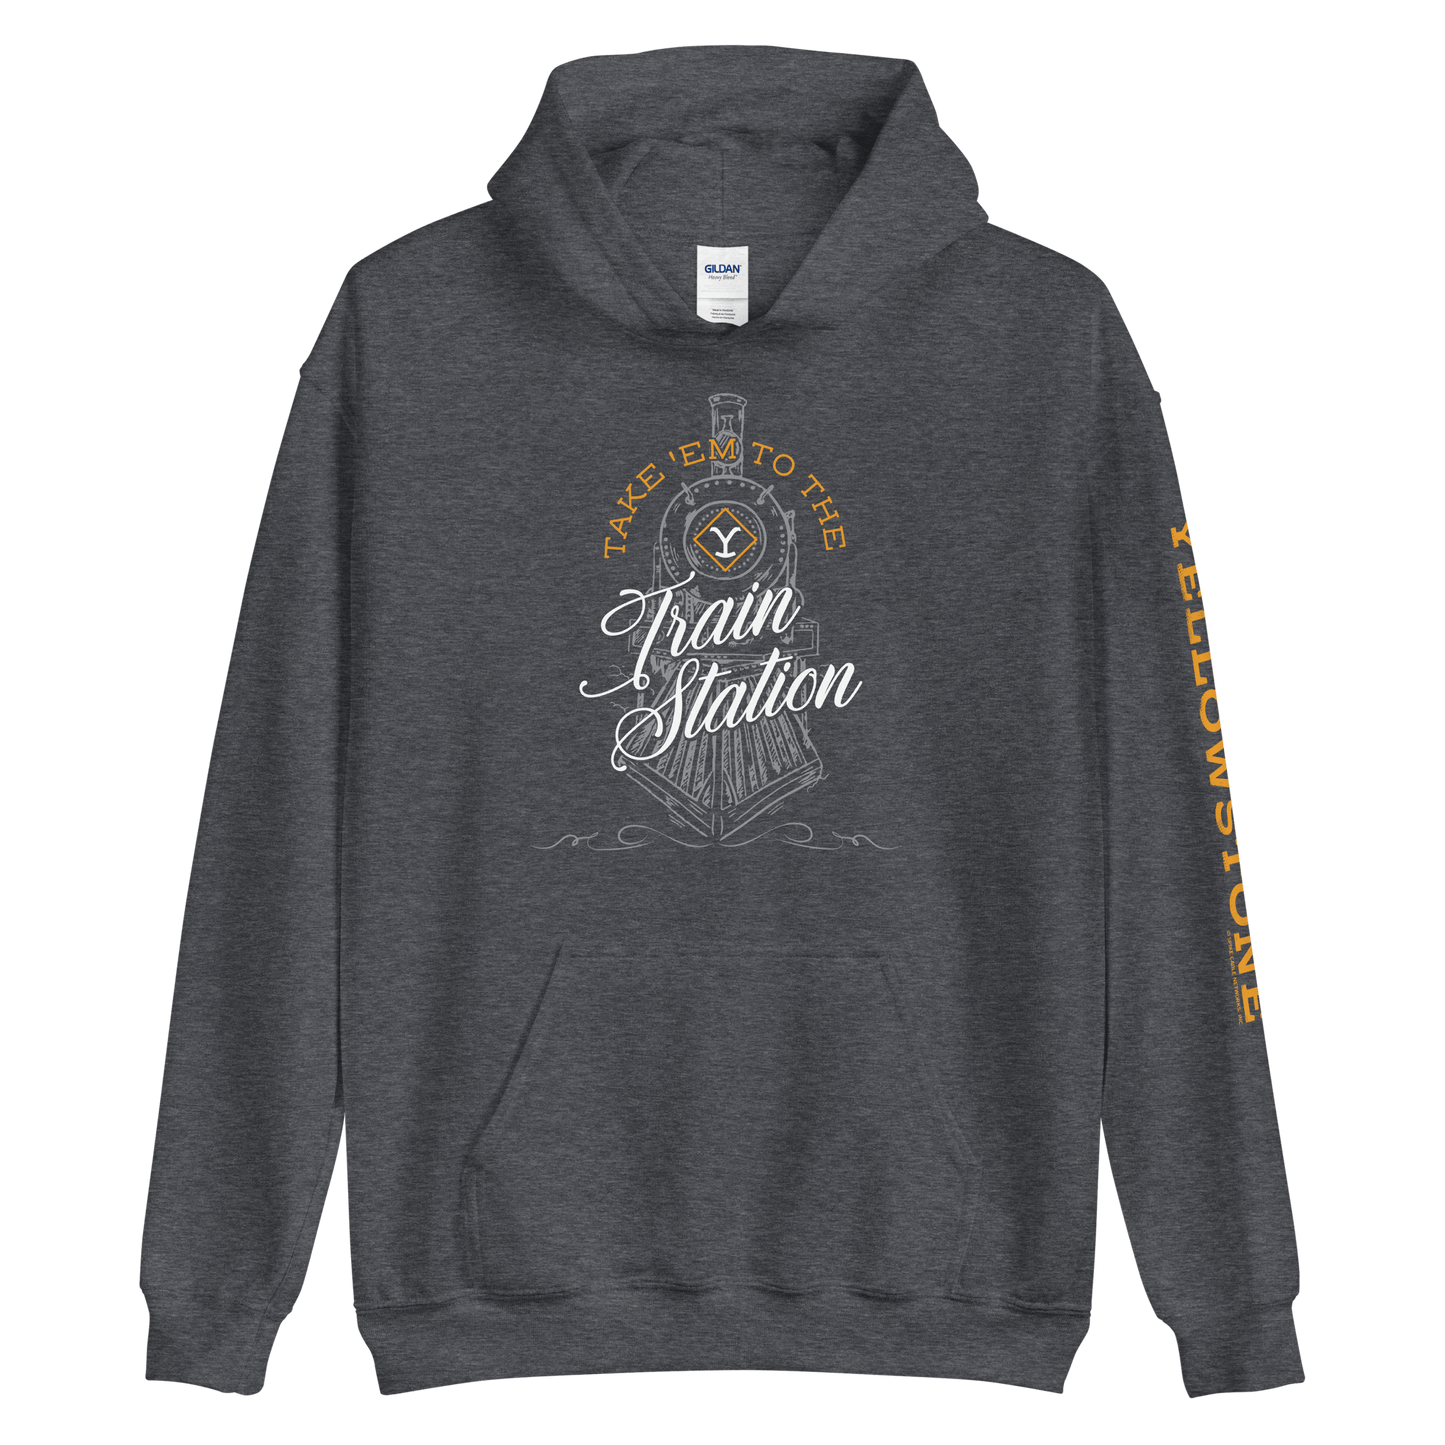 Yellowstone Take 'Em To The Train Station Hooded Sweatshirt - Paramount Shop